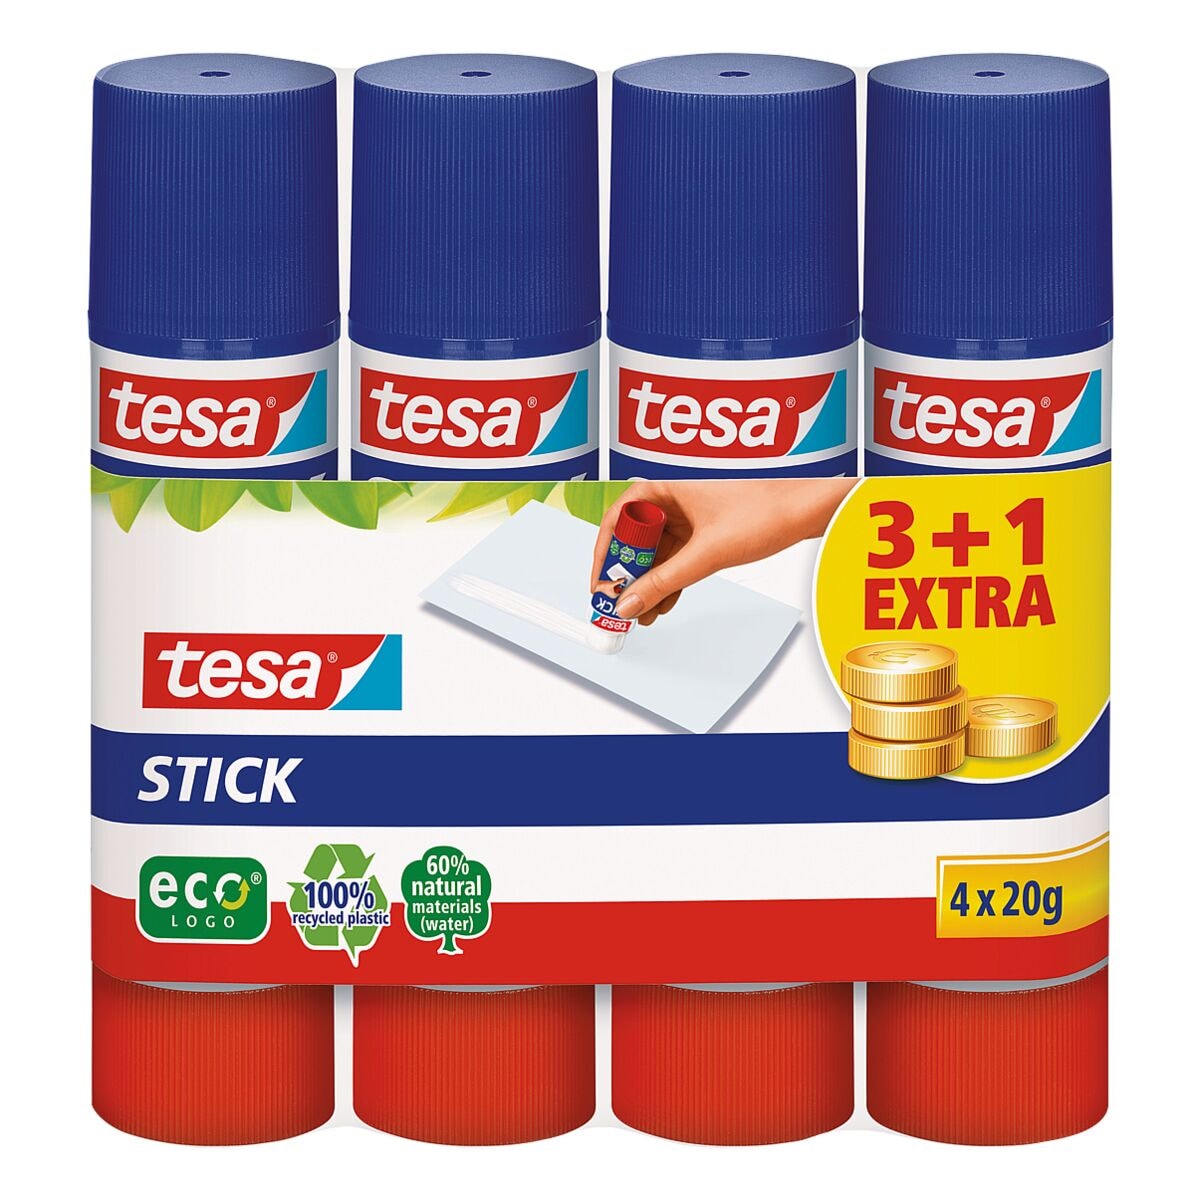 tesa 4er-Pack Klebestifte Stick 57088  ecoLogo® 20 g